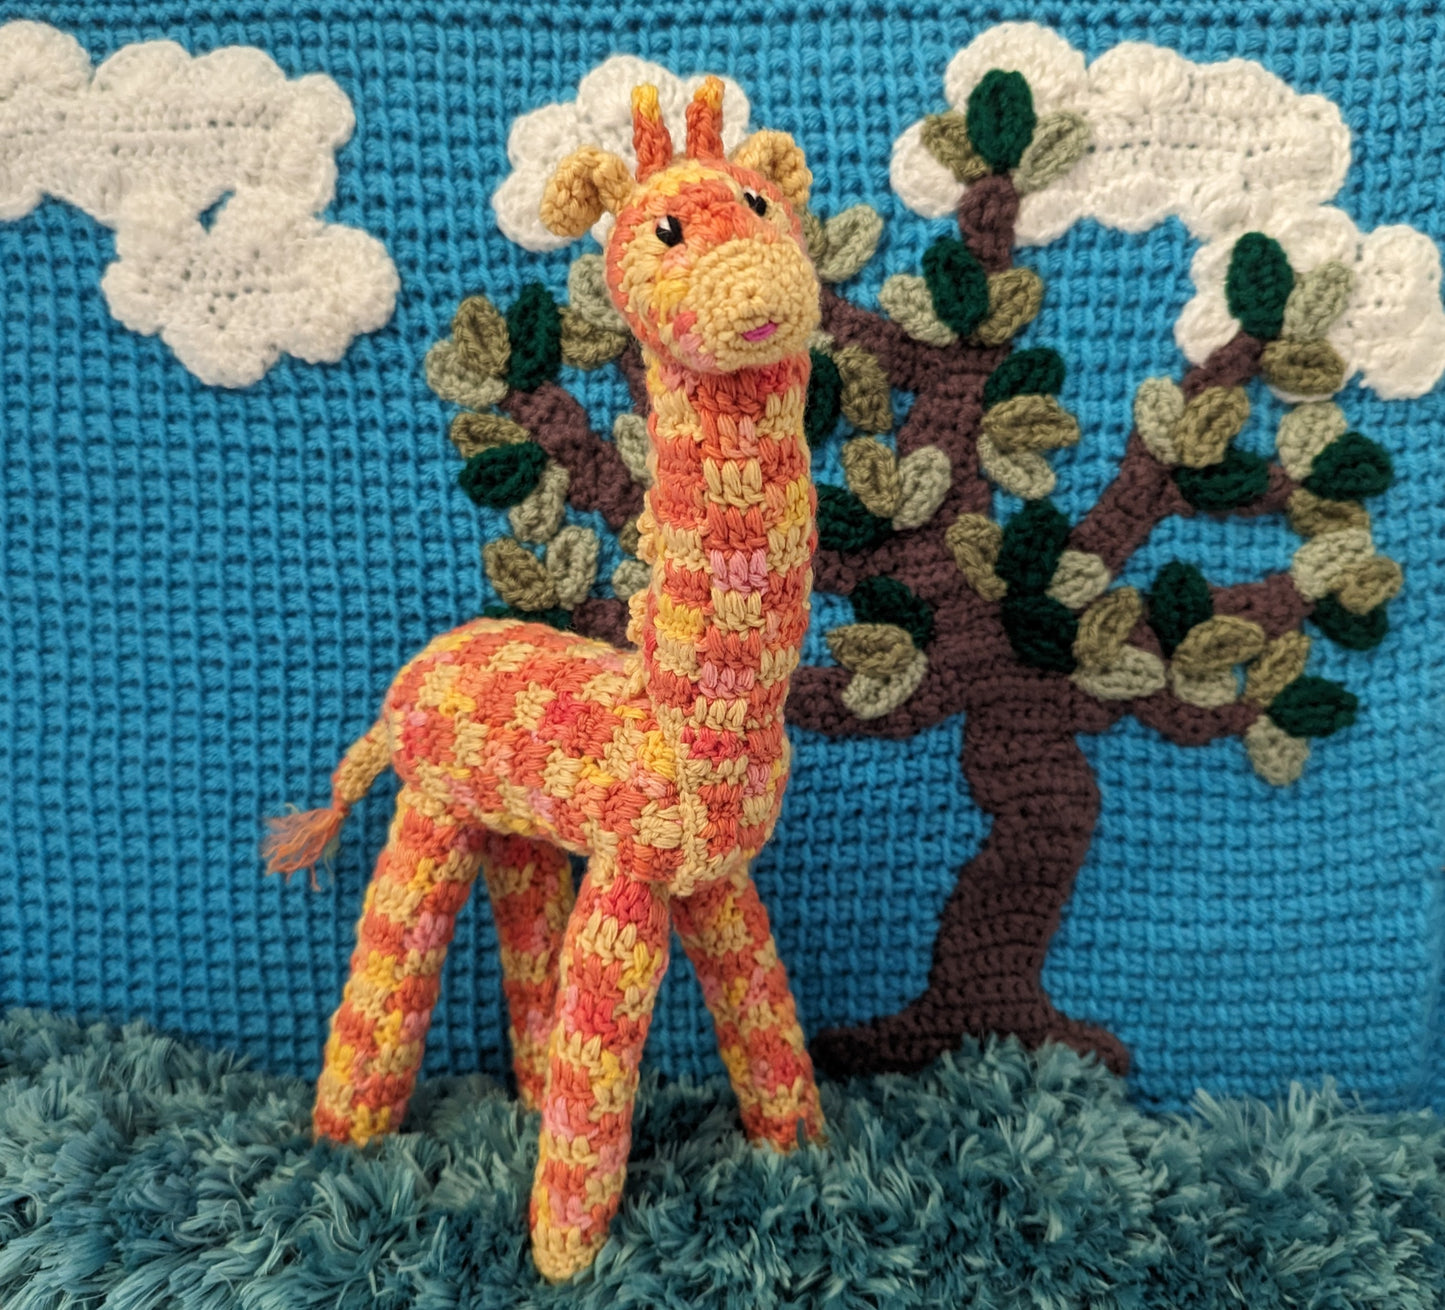 Giraffe Crochet Pattern